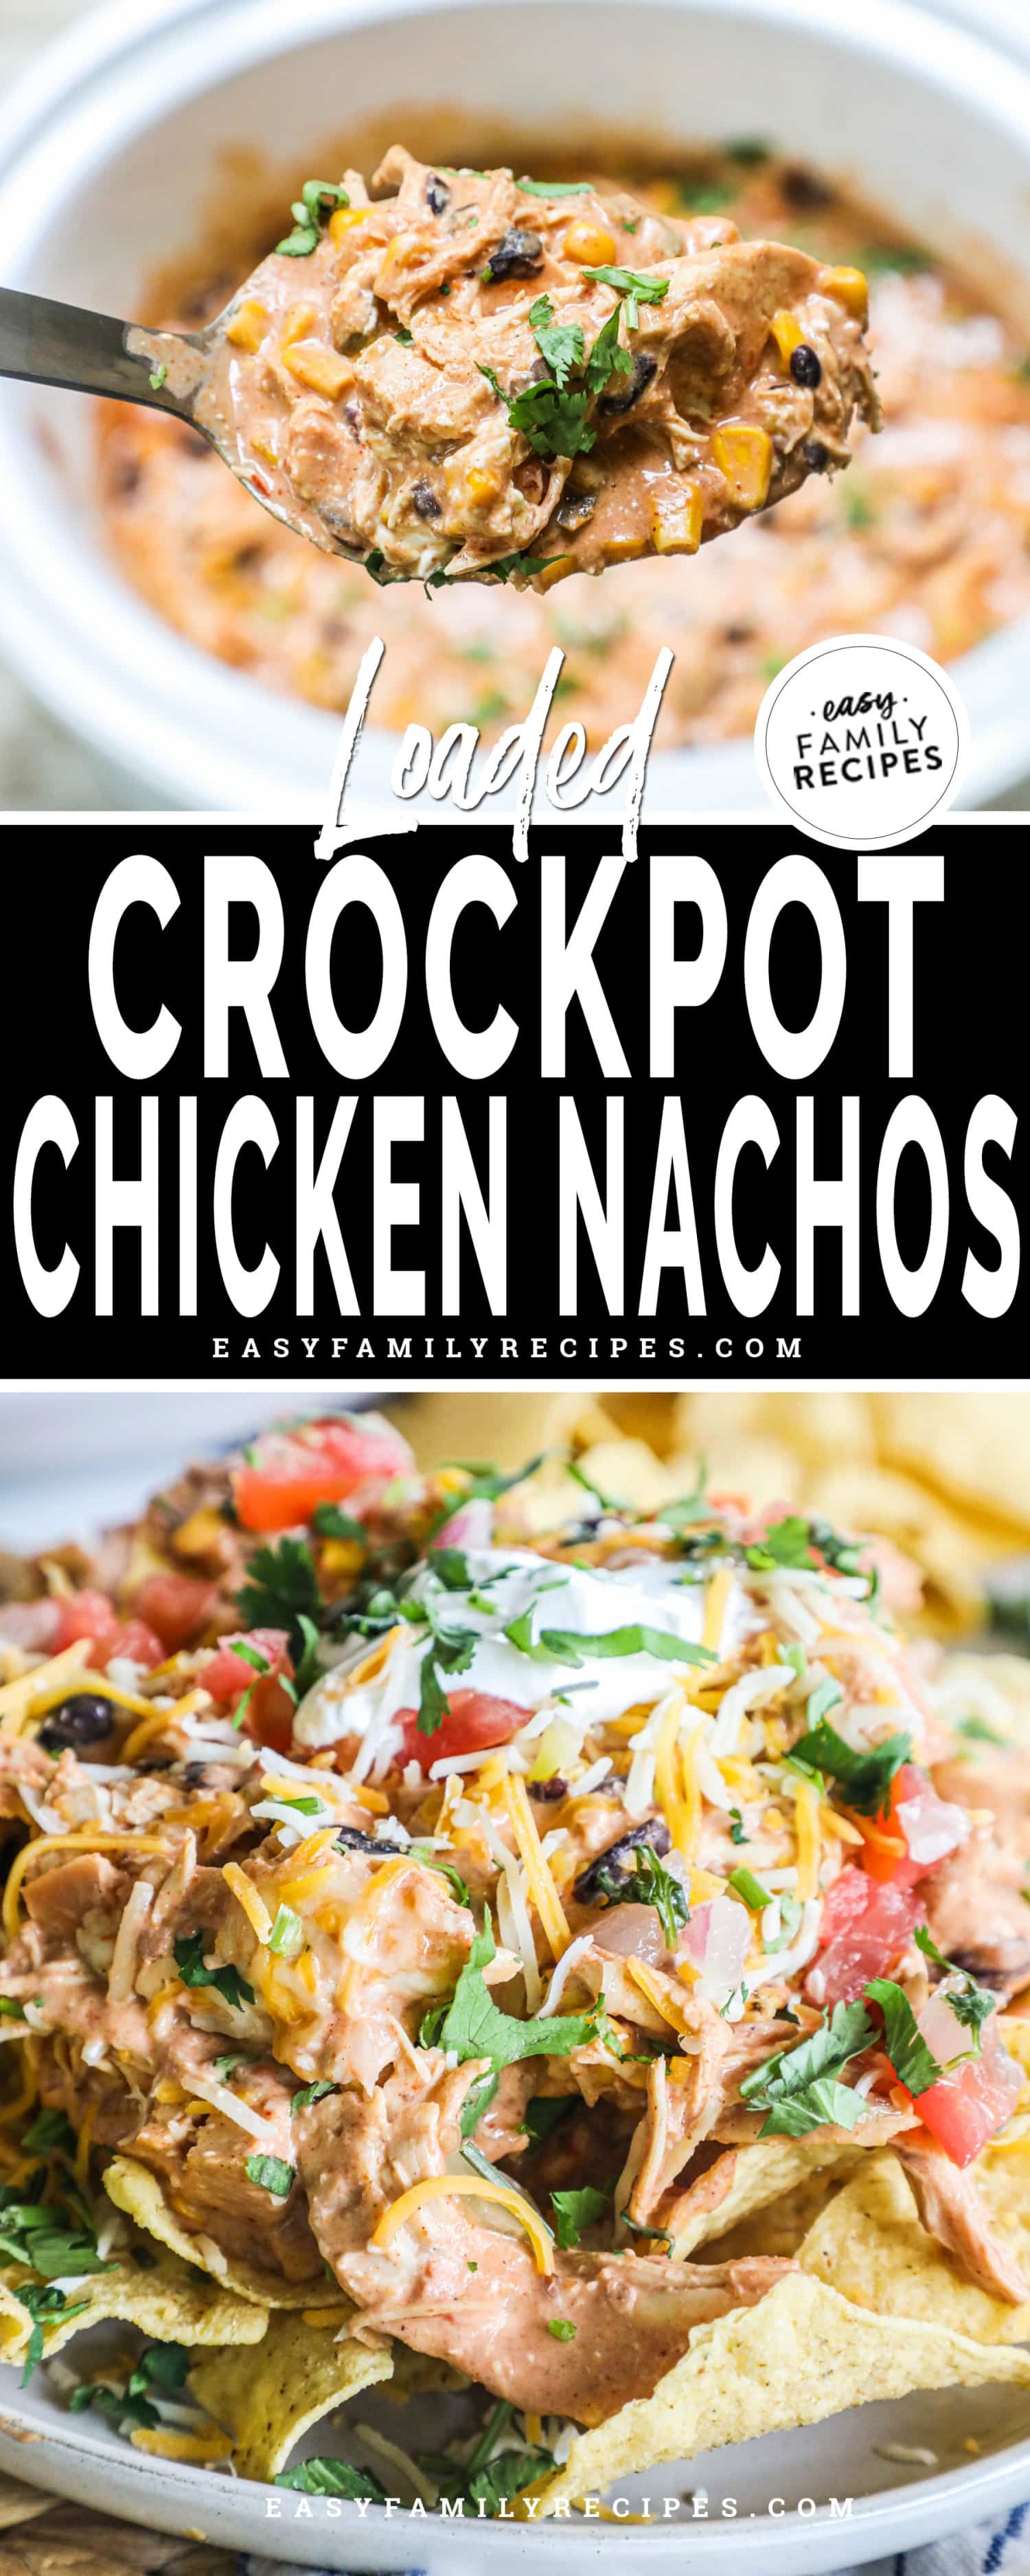 Top photo: spoonful of creamy chicken nacho topping, bottom photo: crockpot chicken nachos on plate